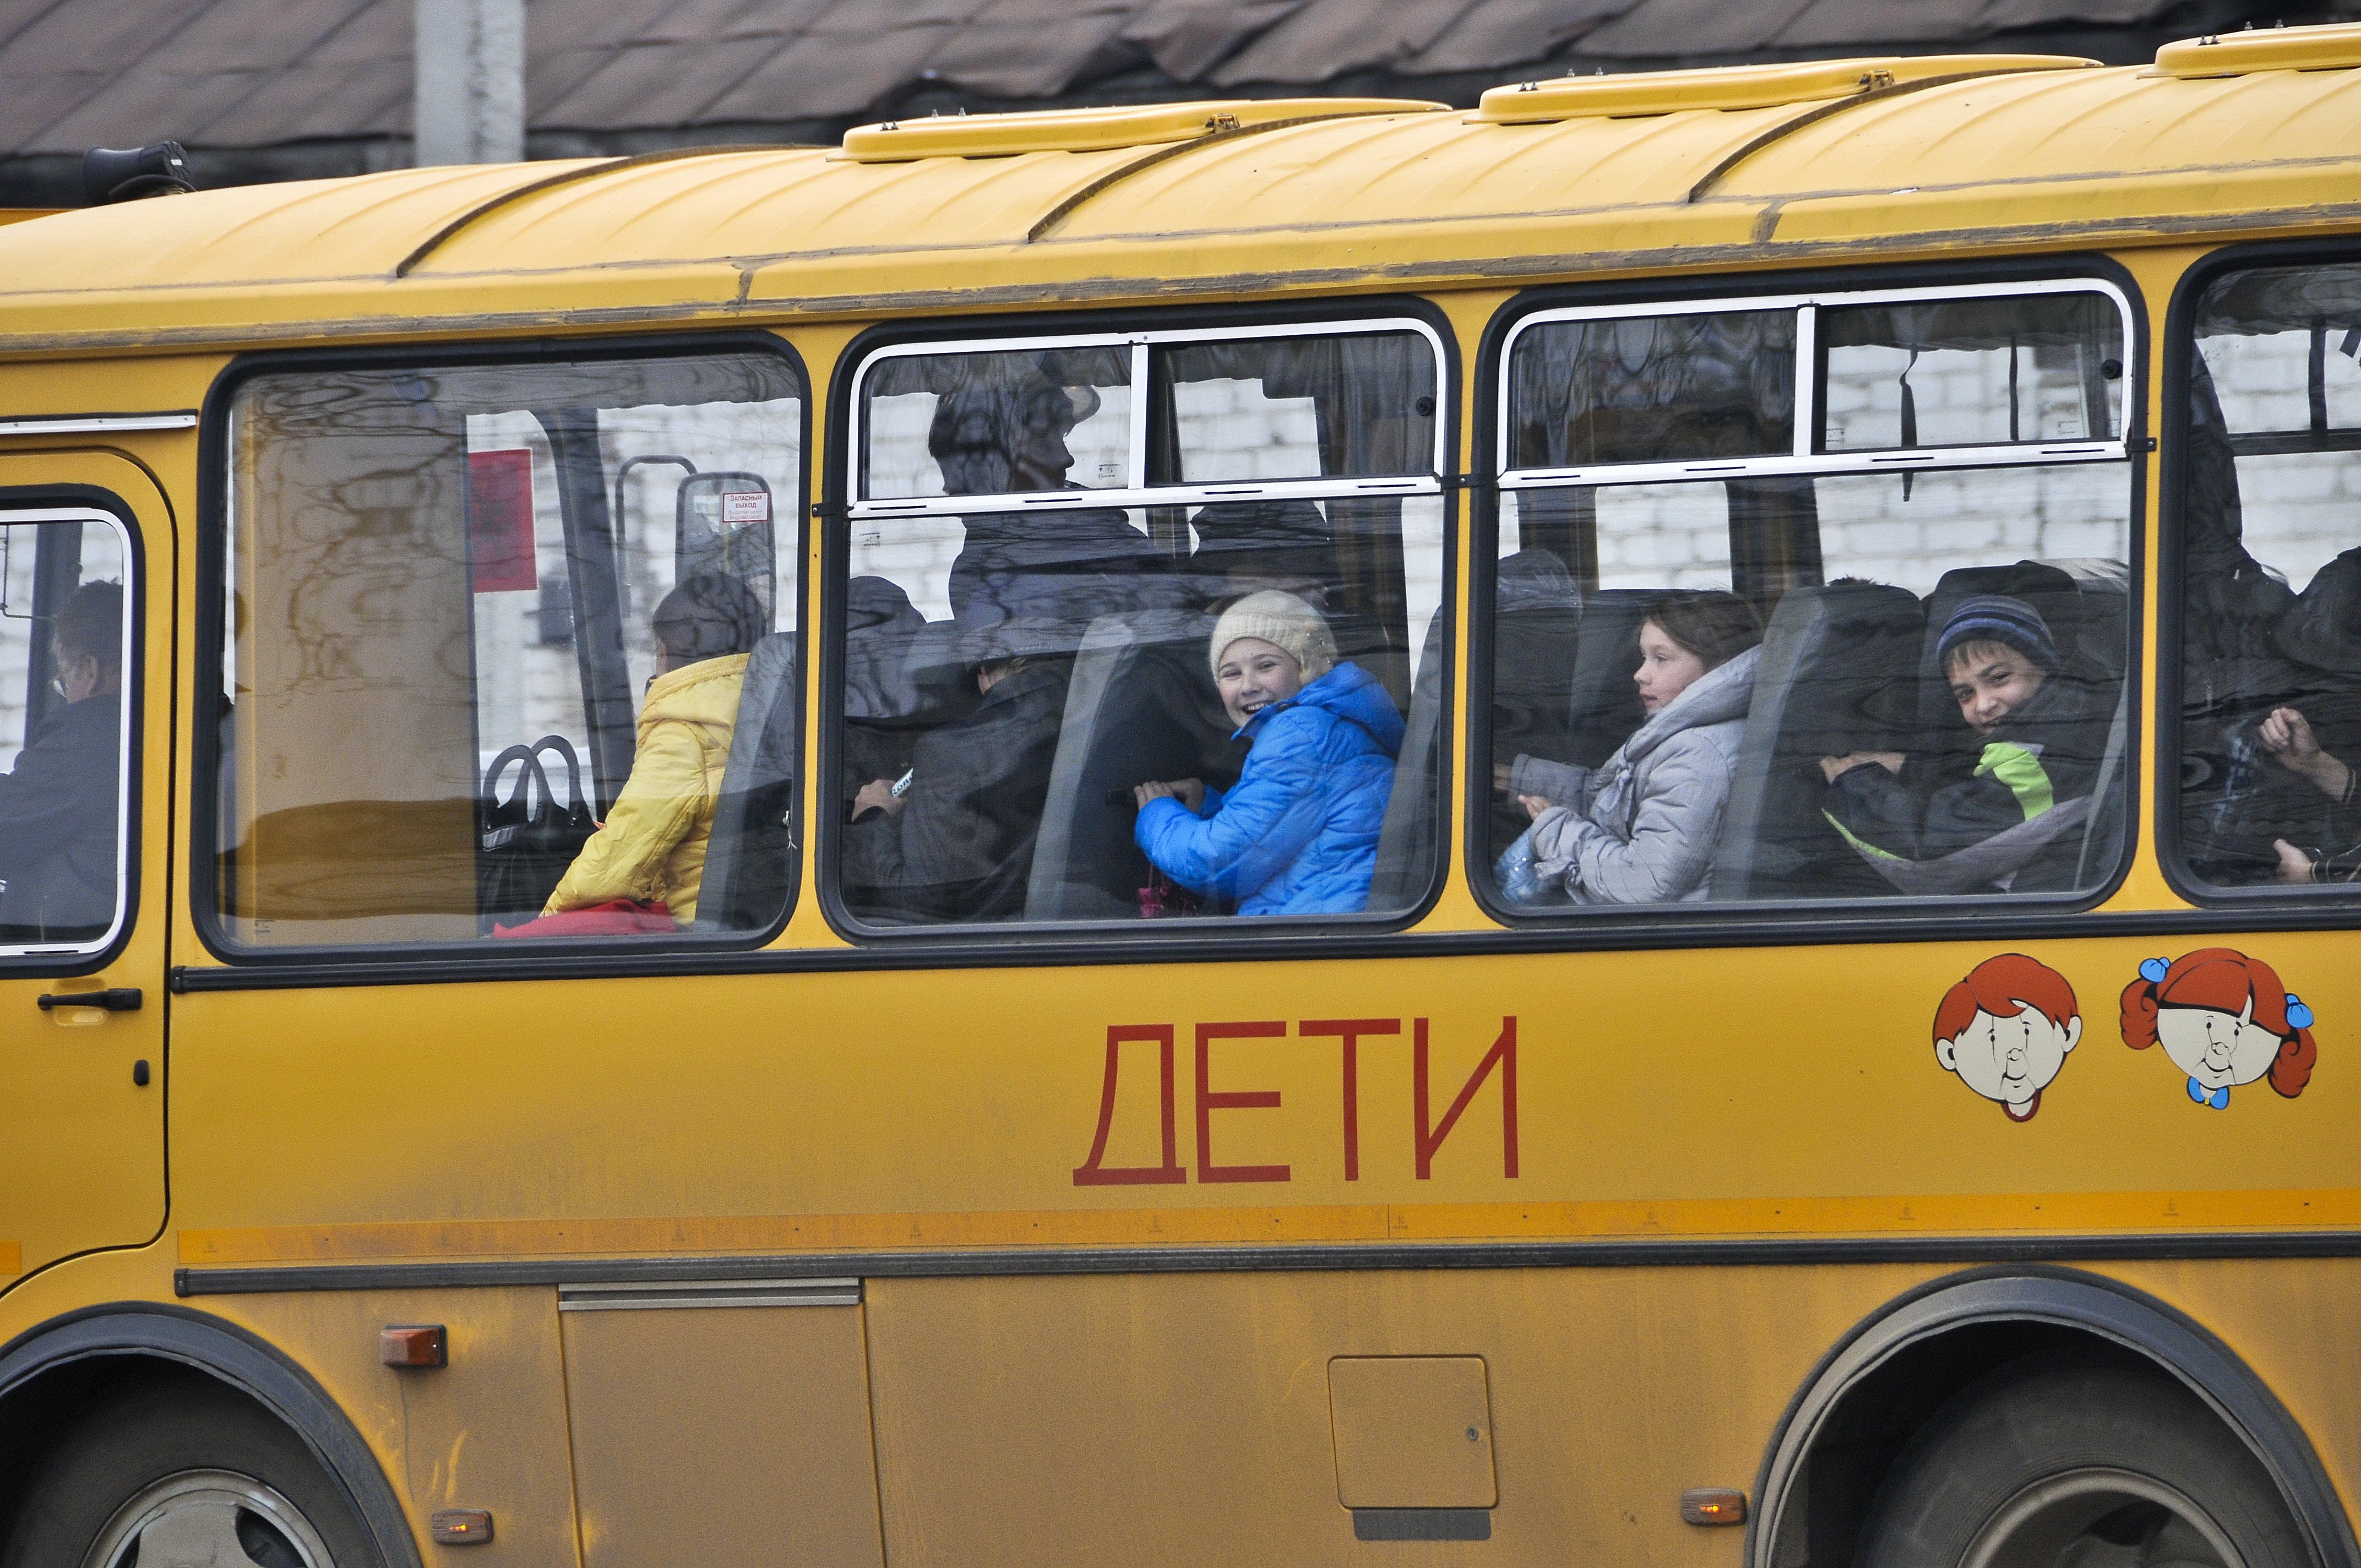 Желтые автобусы дети. Школьный автобус. Автобус для детей. Школьные автобусы в России. Школьный автобус дети.